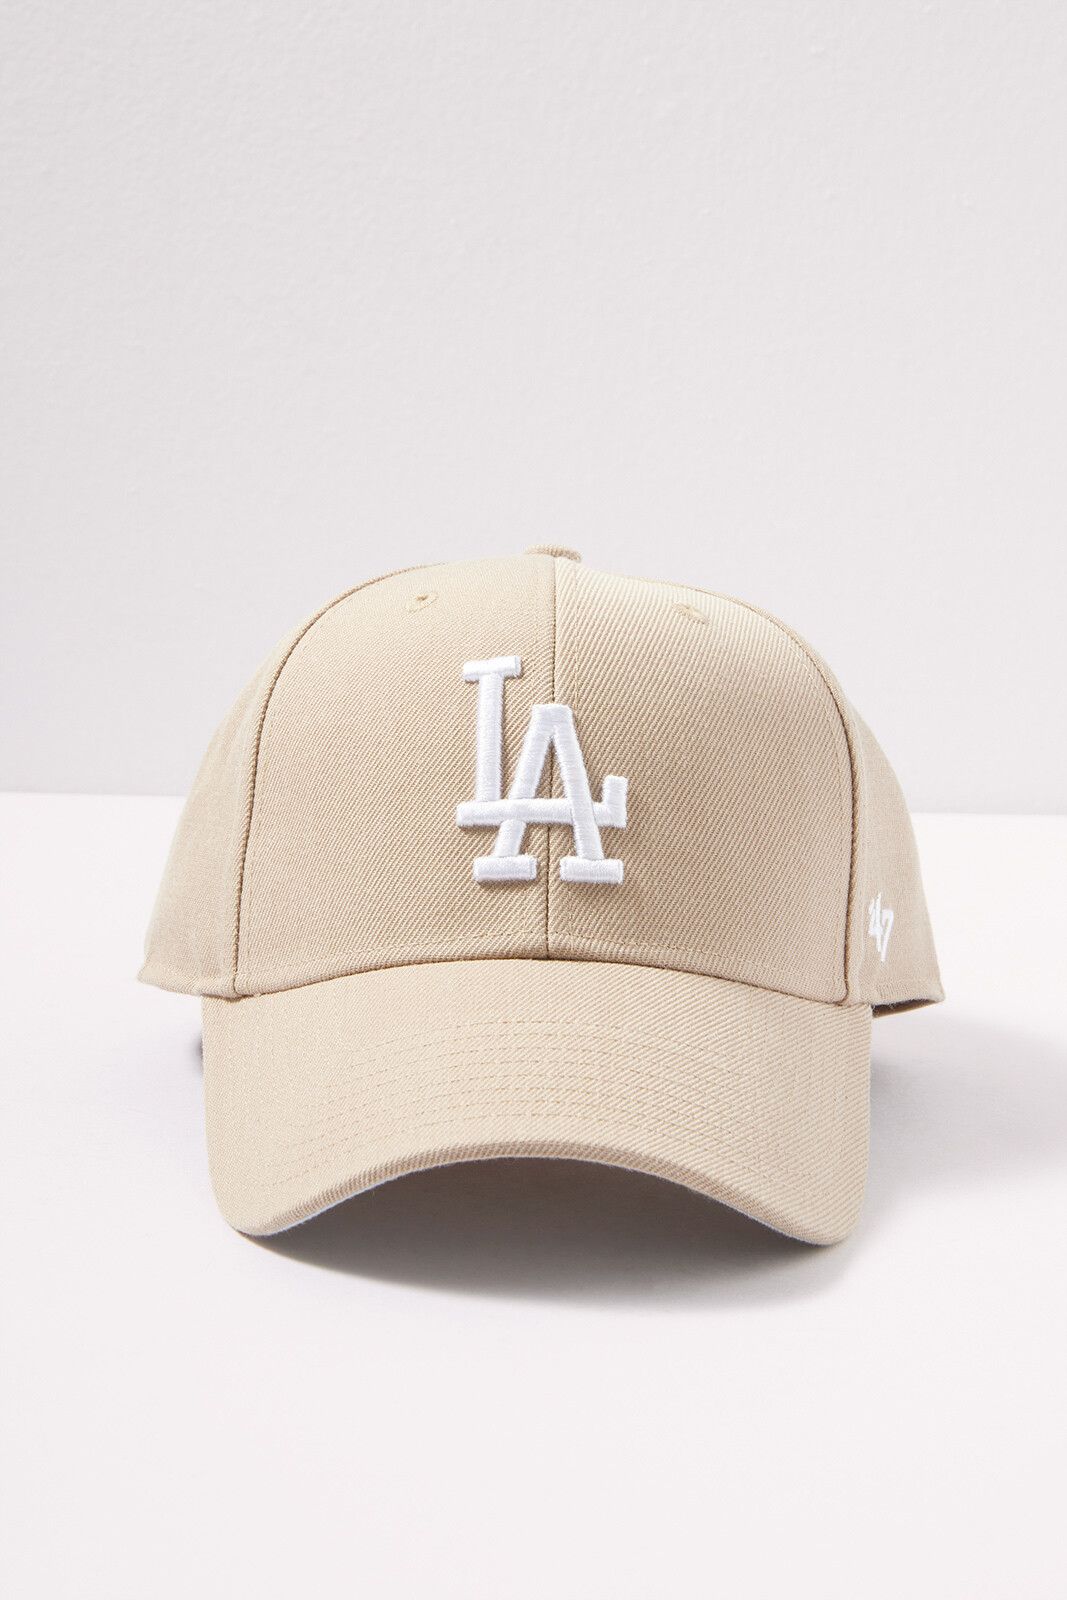 LA Baseball Hat | EVEREVE